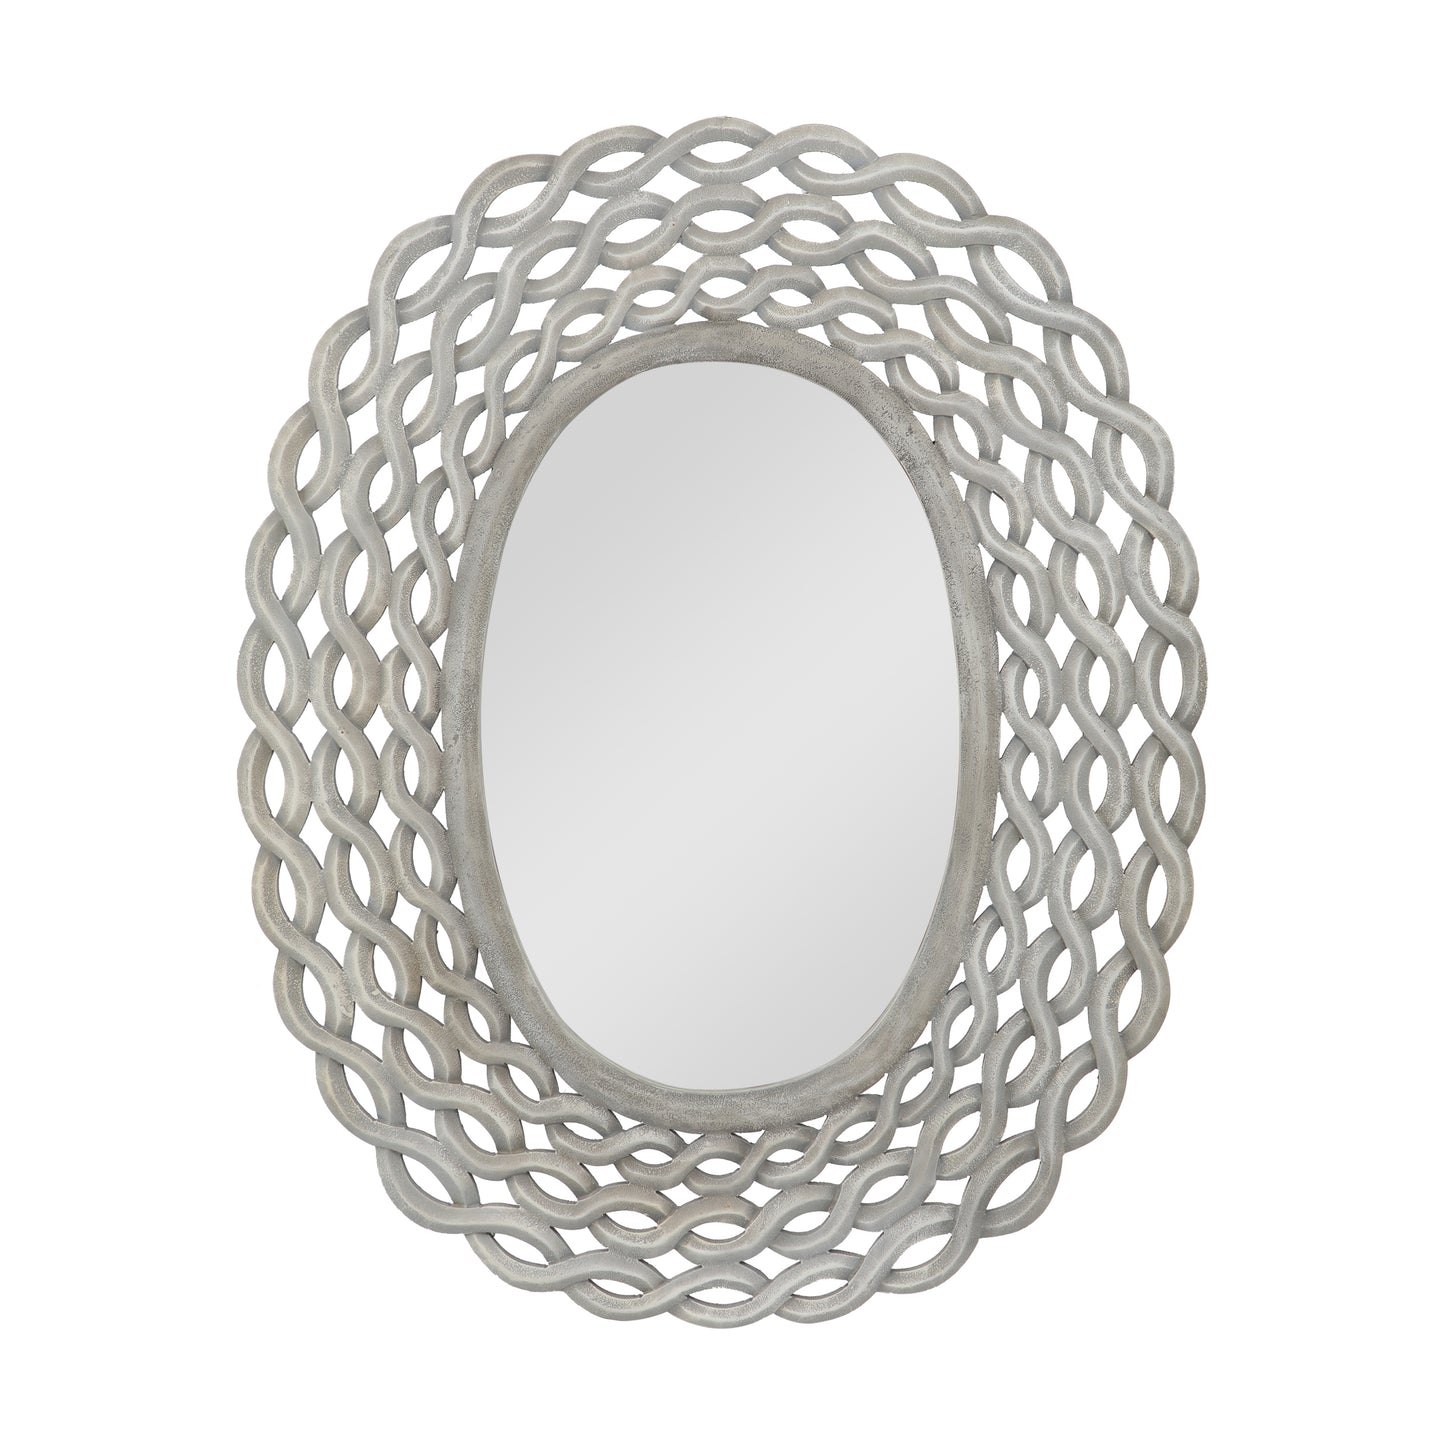 Hedy Modern Braided Weave Mirror